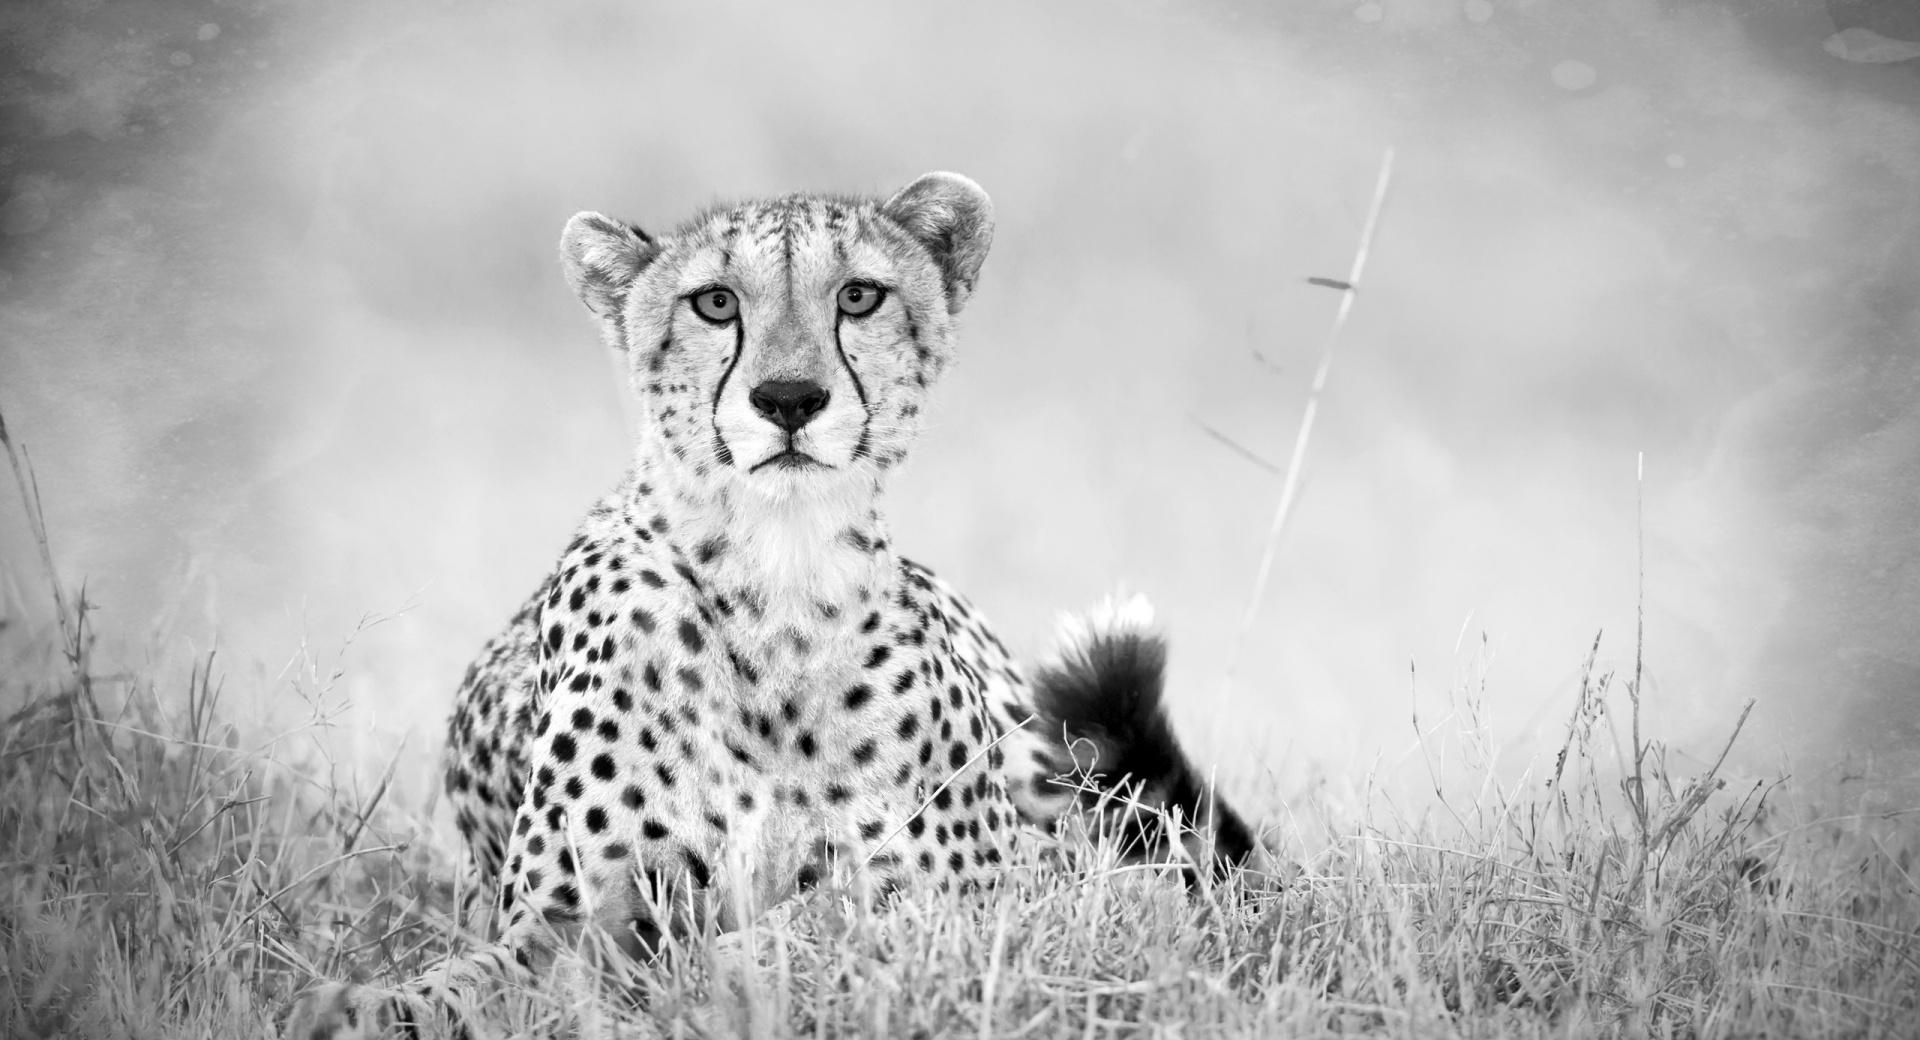 Cheetah Monochrome at 1024 x 1024 iPad size wallpapers HD quality